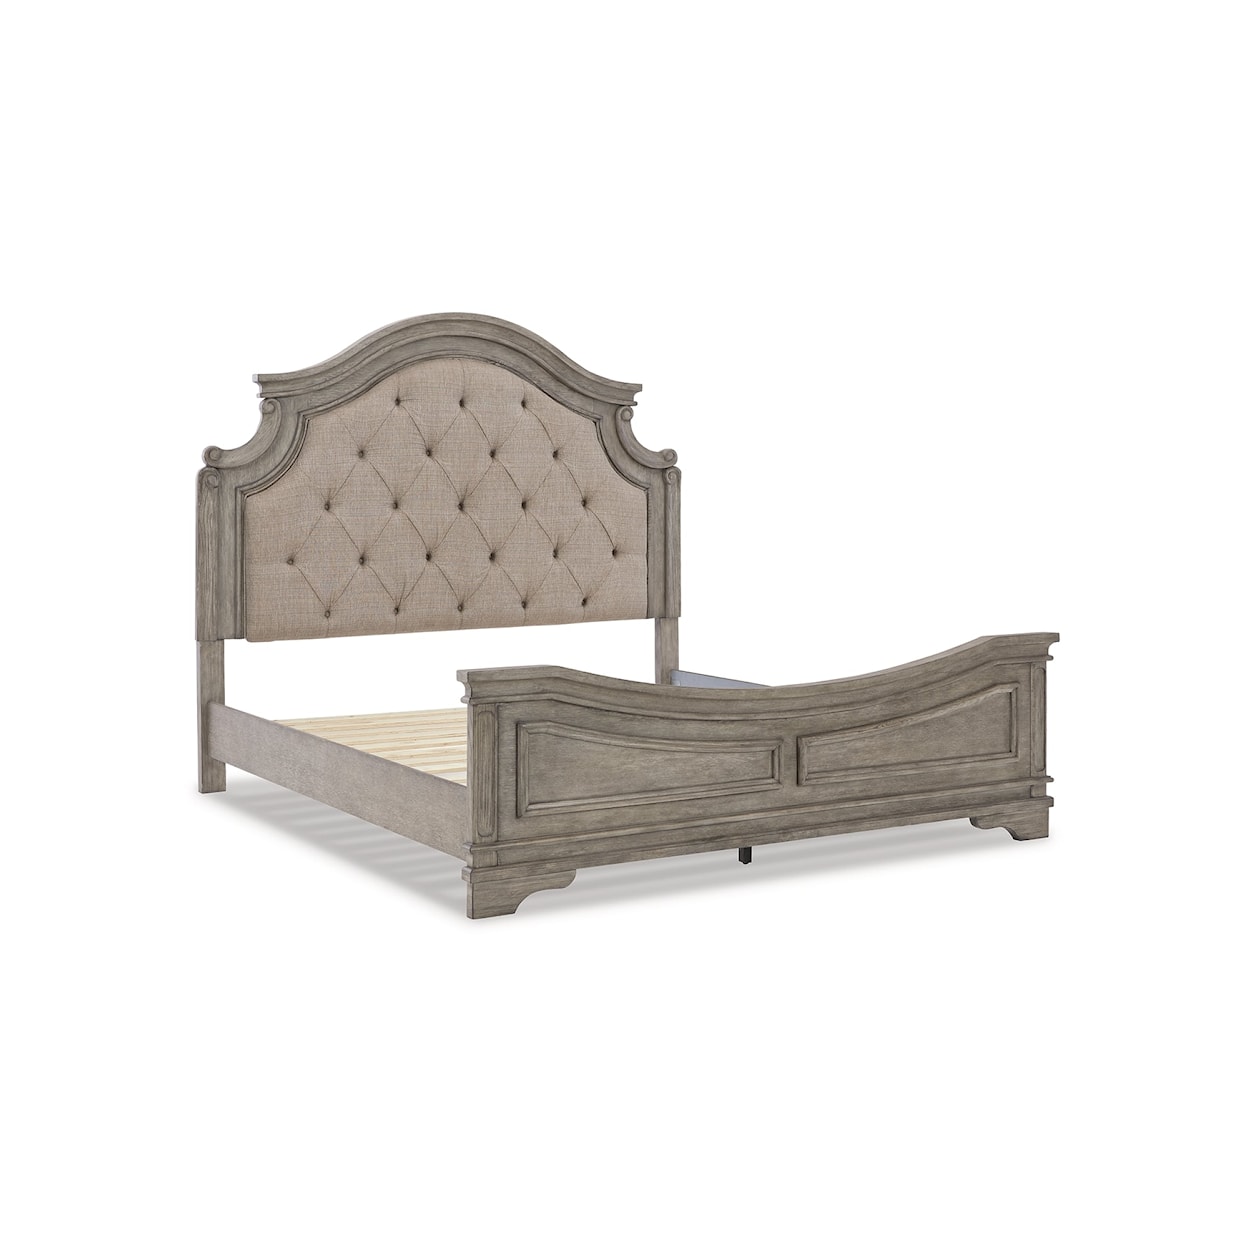 Ashley Furniture Signature Design Lodenbay California King Panel Bed